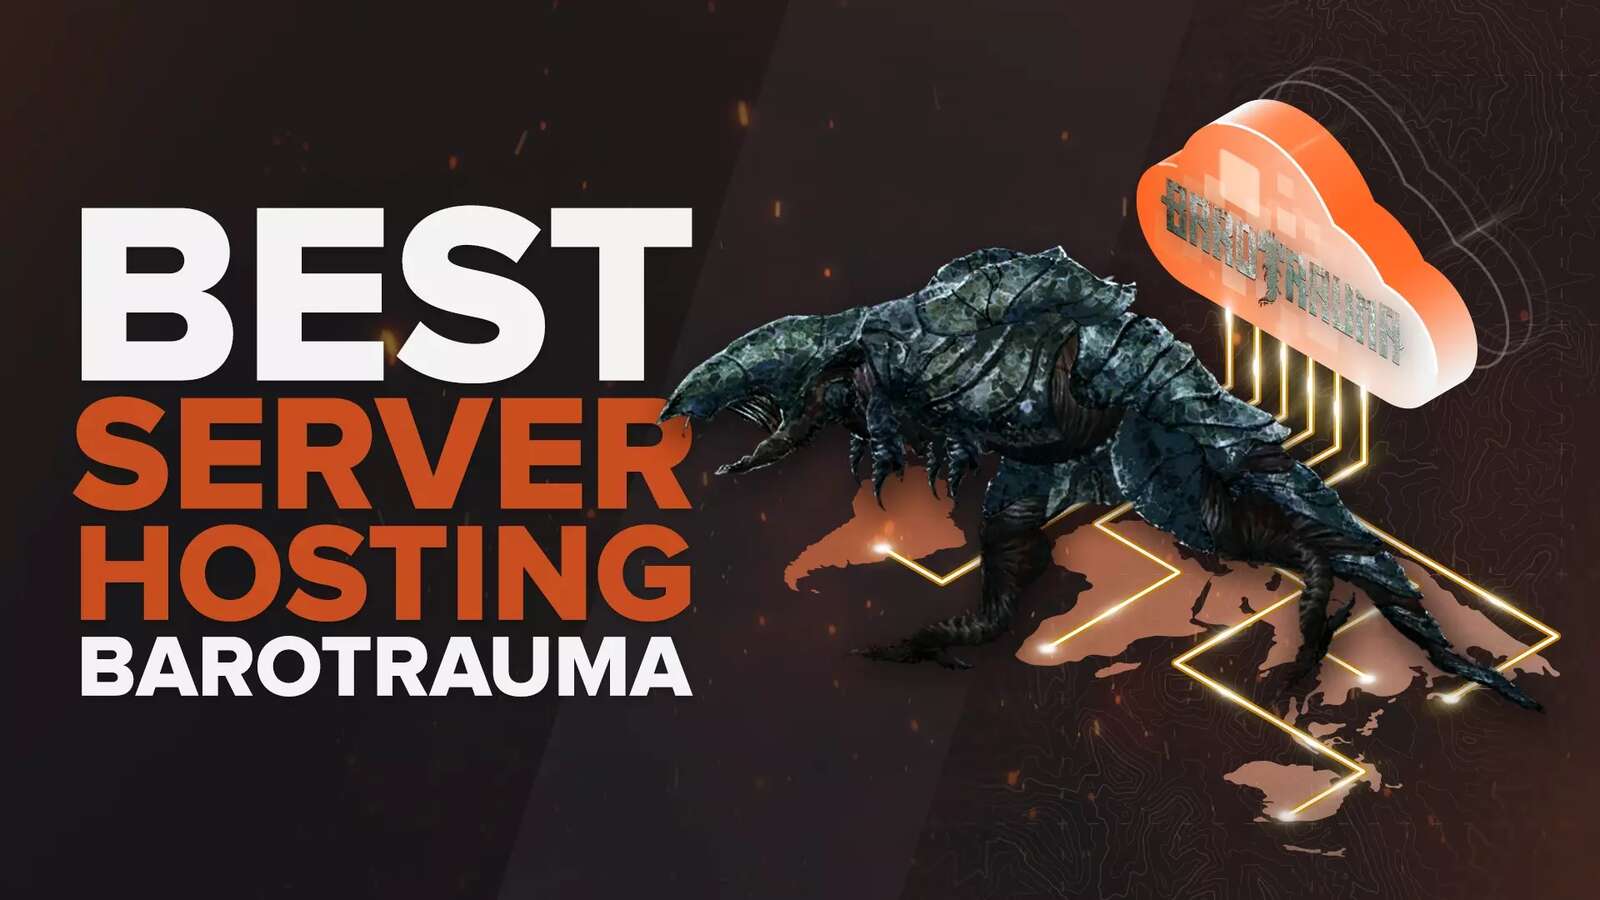 Best Barotrauma Server Hosting Service [All Tested]